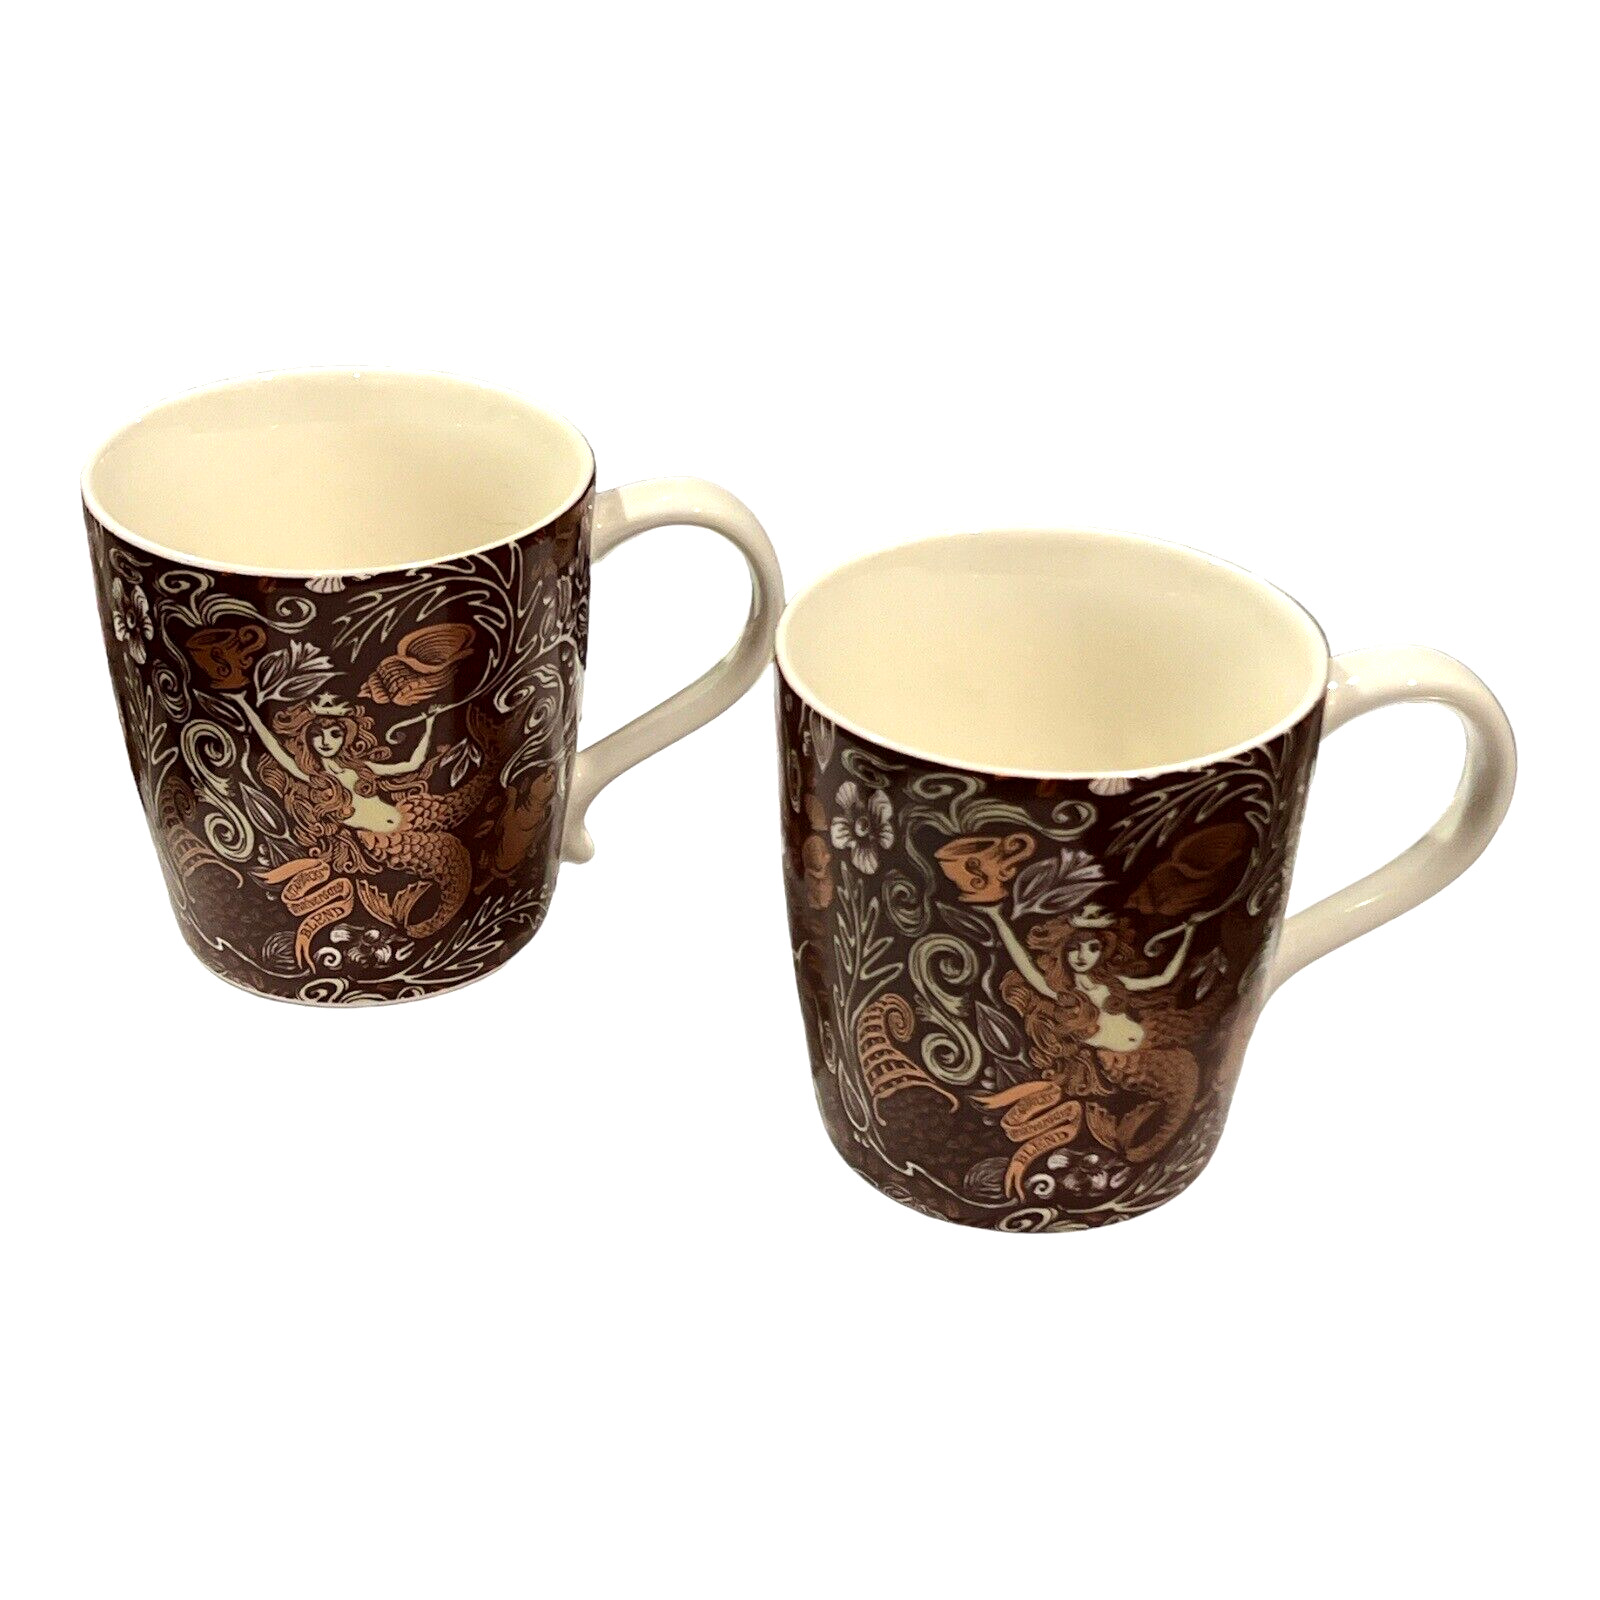 Set of 2 Starbucks Cups Mermaid 2008 Anniversary 12 oz 2 Coffee Mugs Ceramic